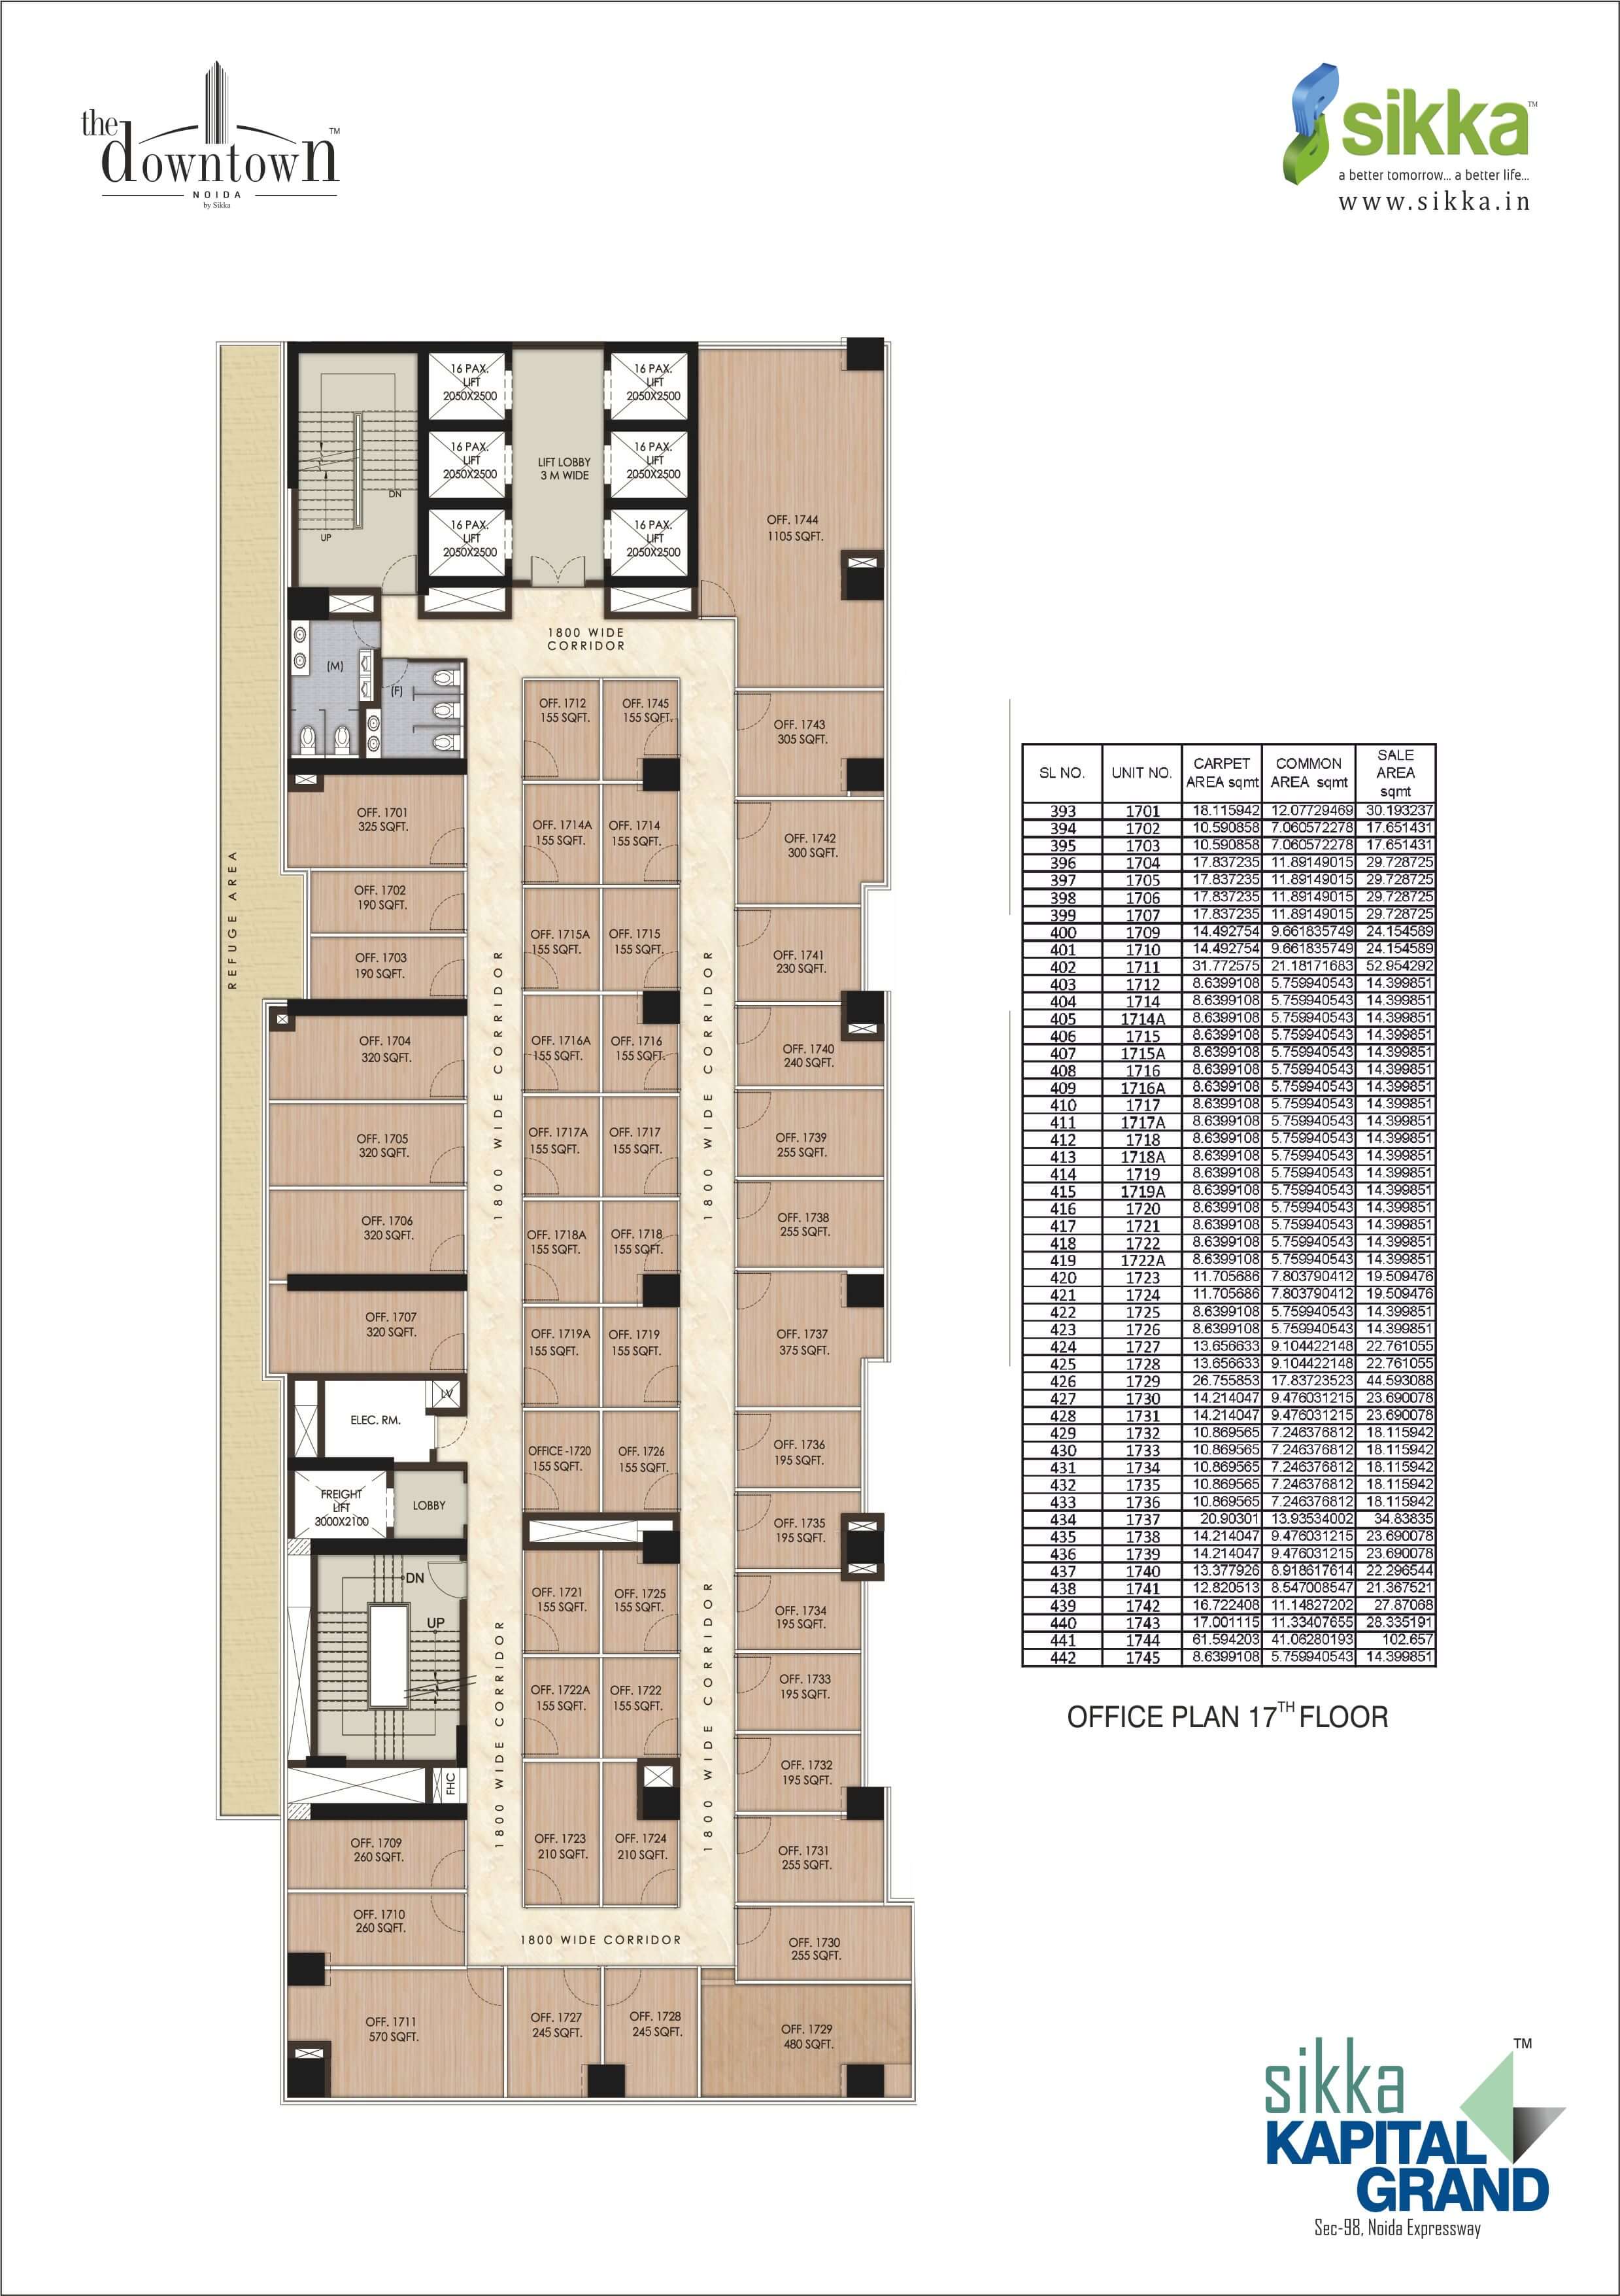 Kapital Grand - Office Plan 17th Floor